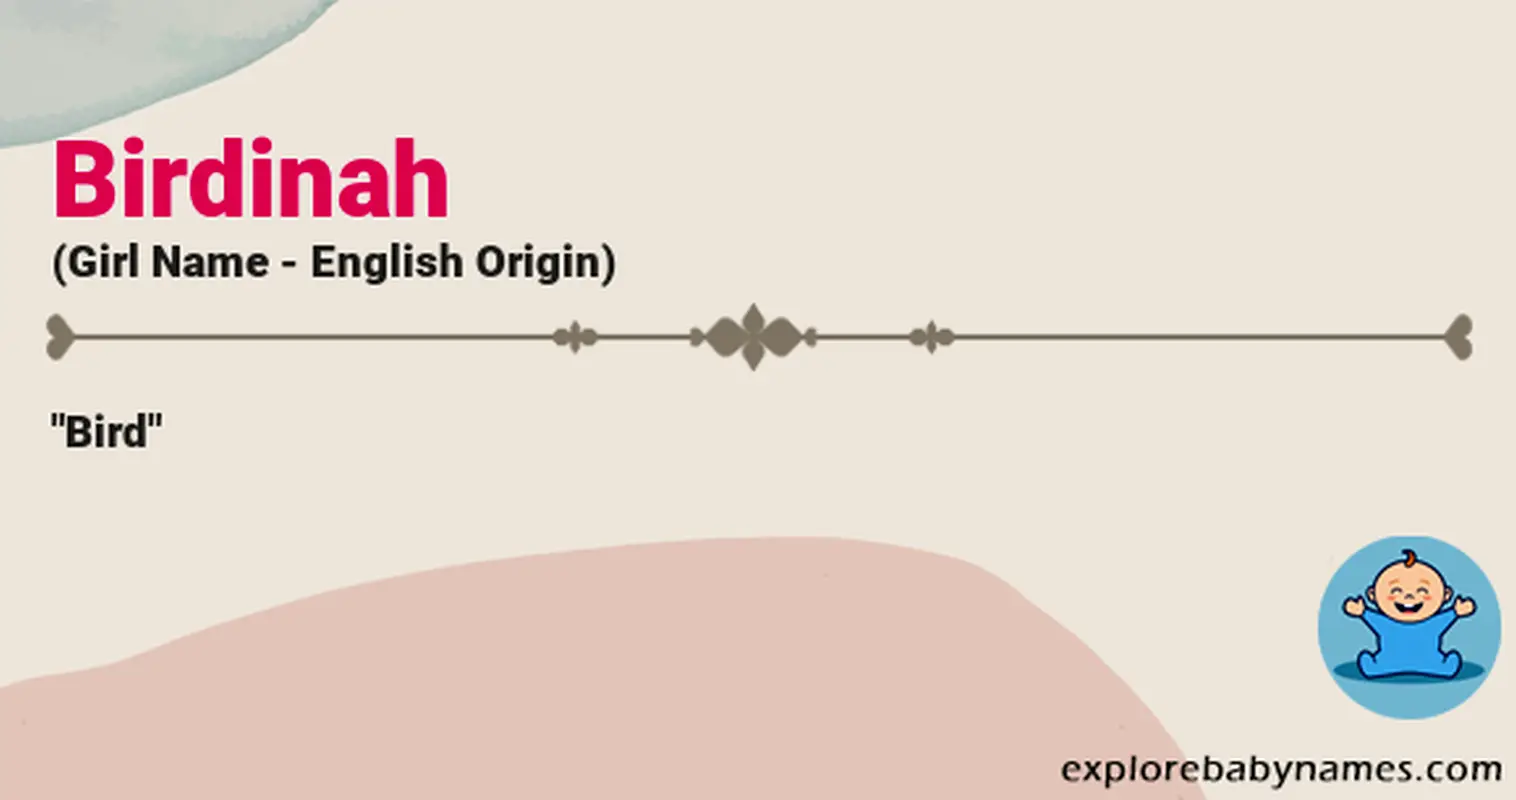 Meaning of Birdinah